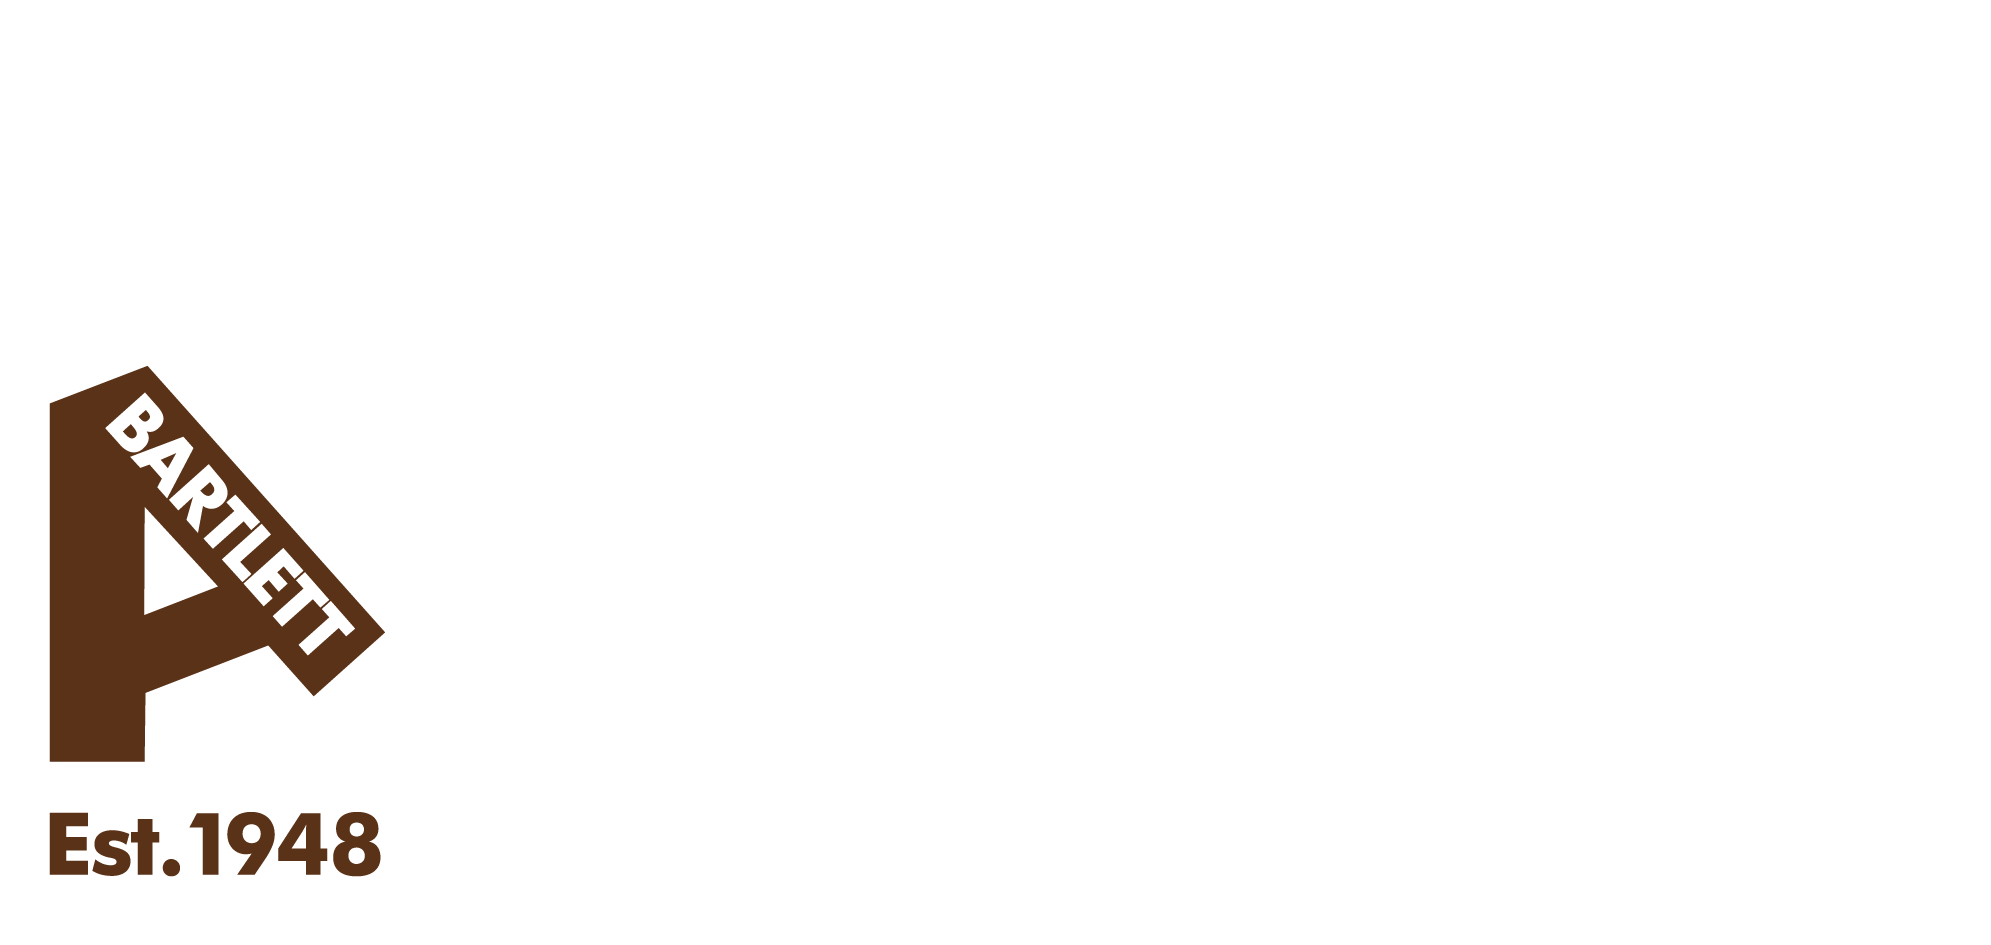 Albert Bartlett Logo